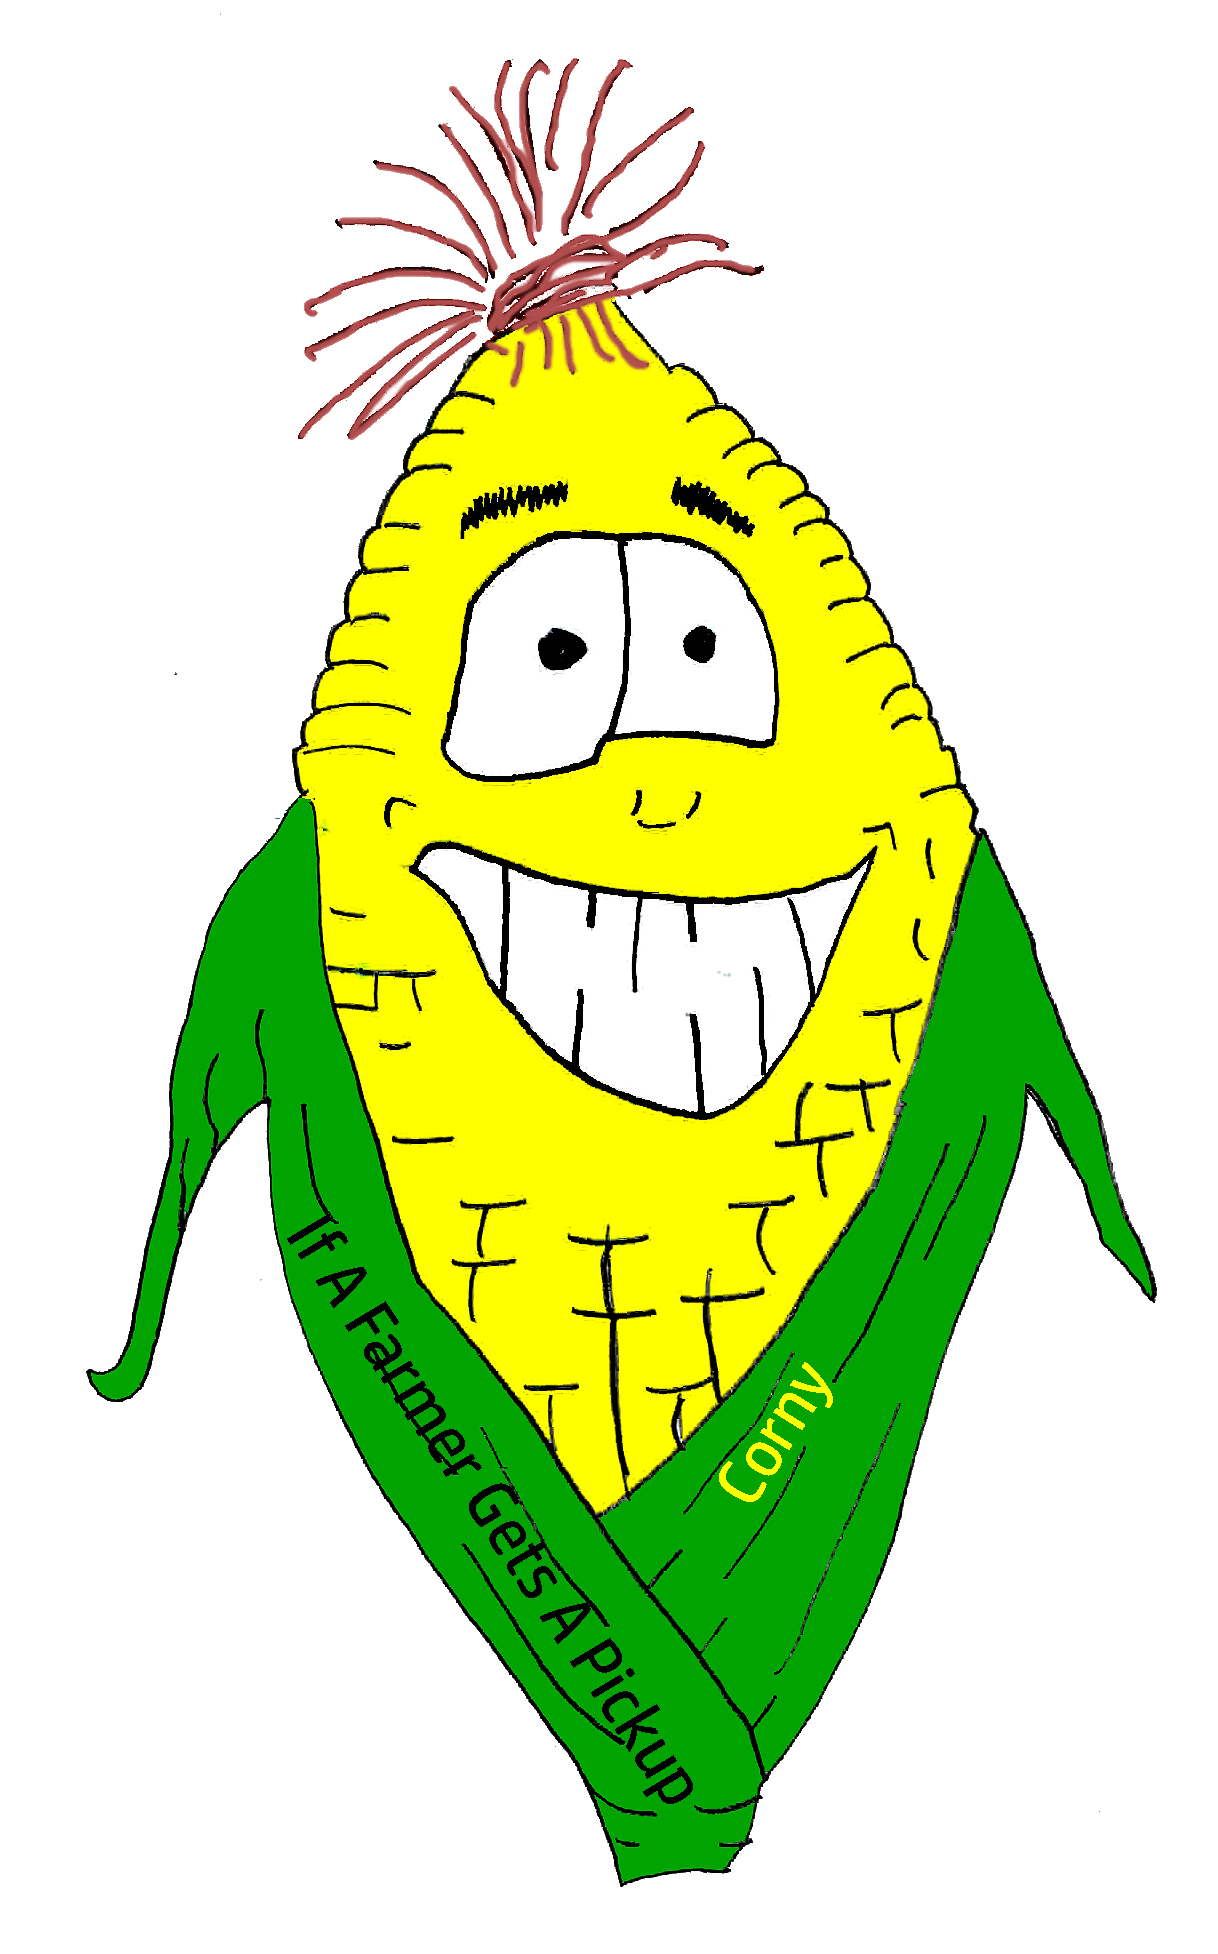 Corny 'If A Farmer Gets A Pickup'